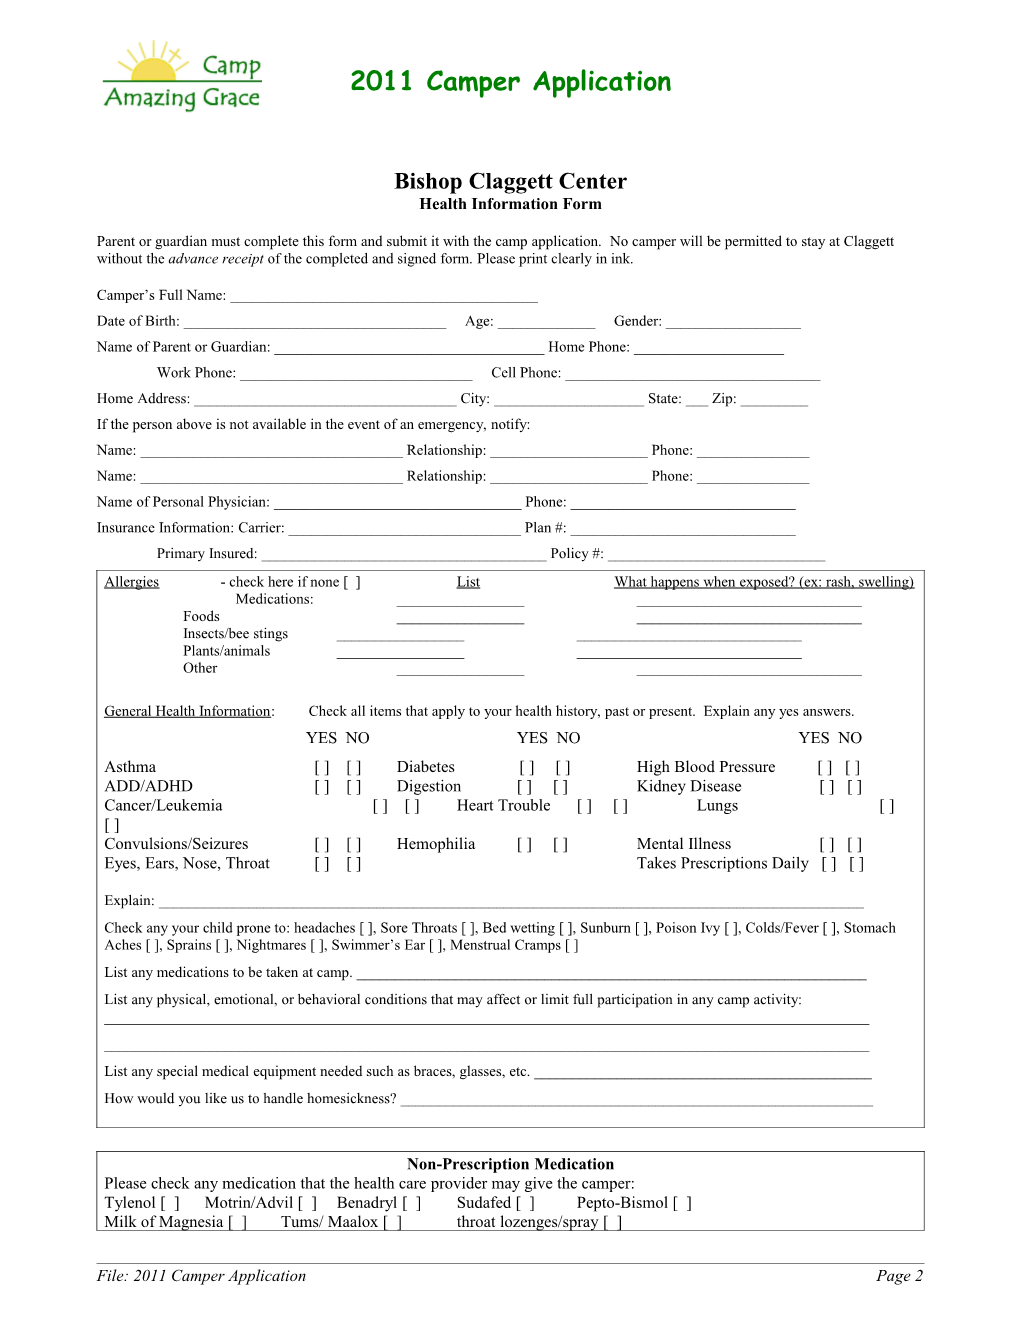 Application for Bishop Claggett Center